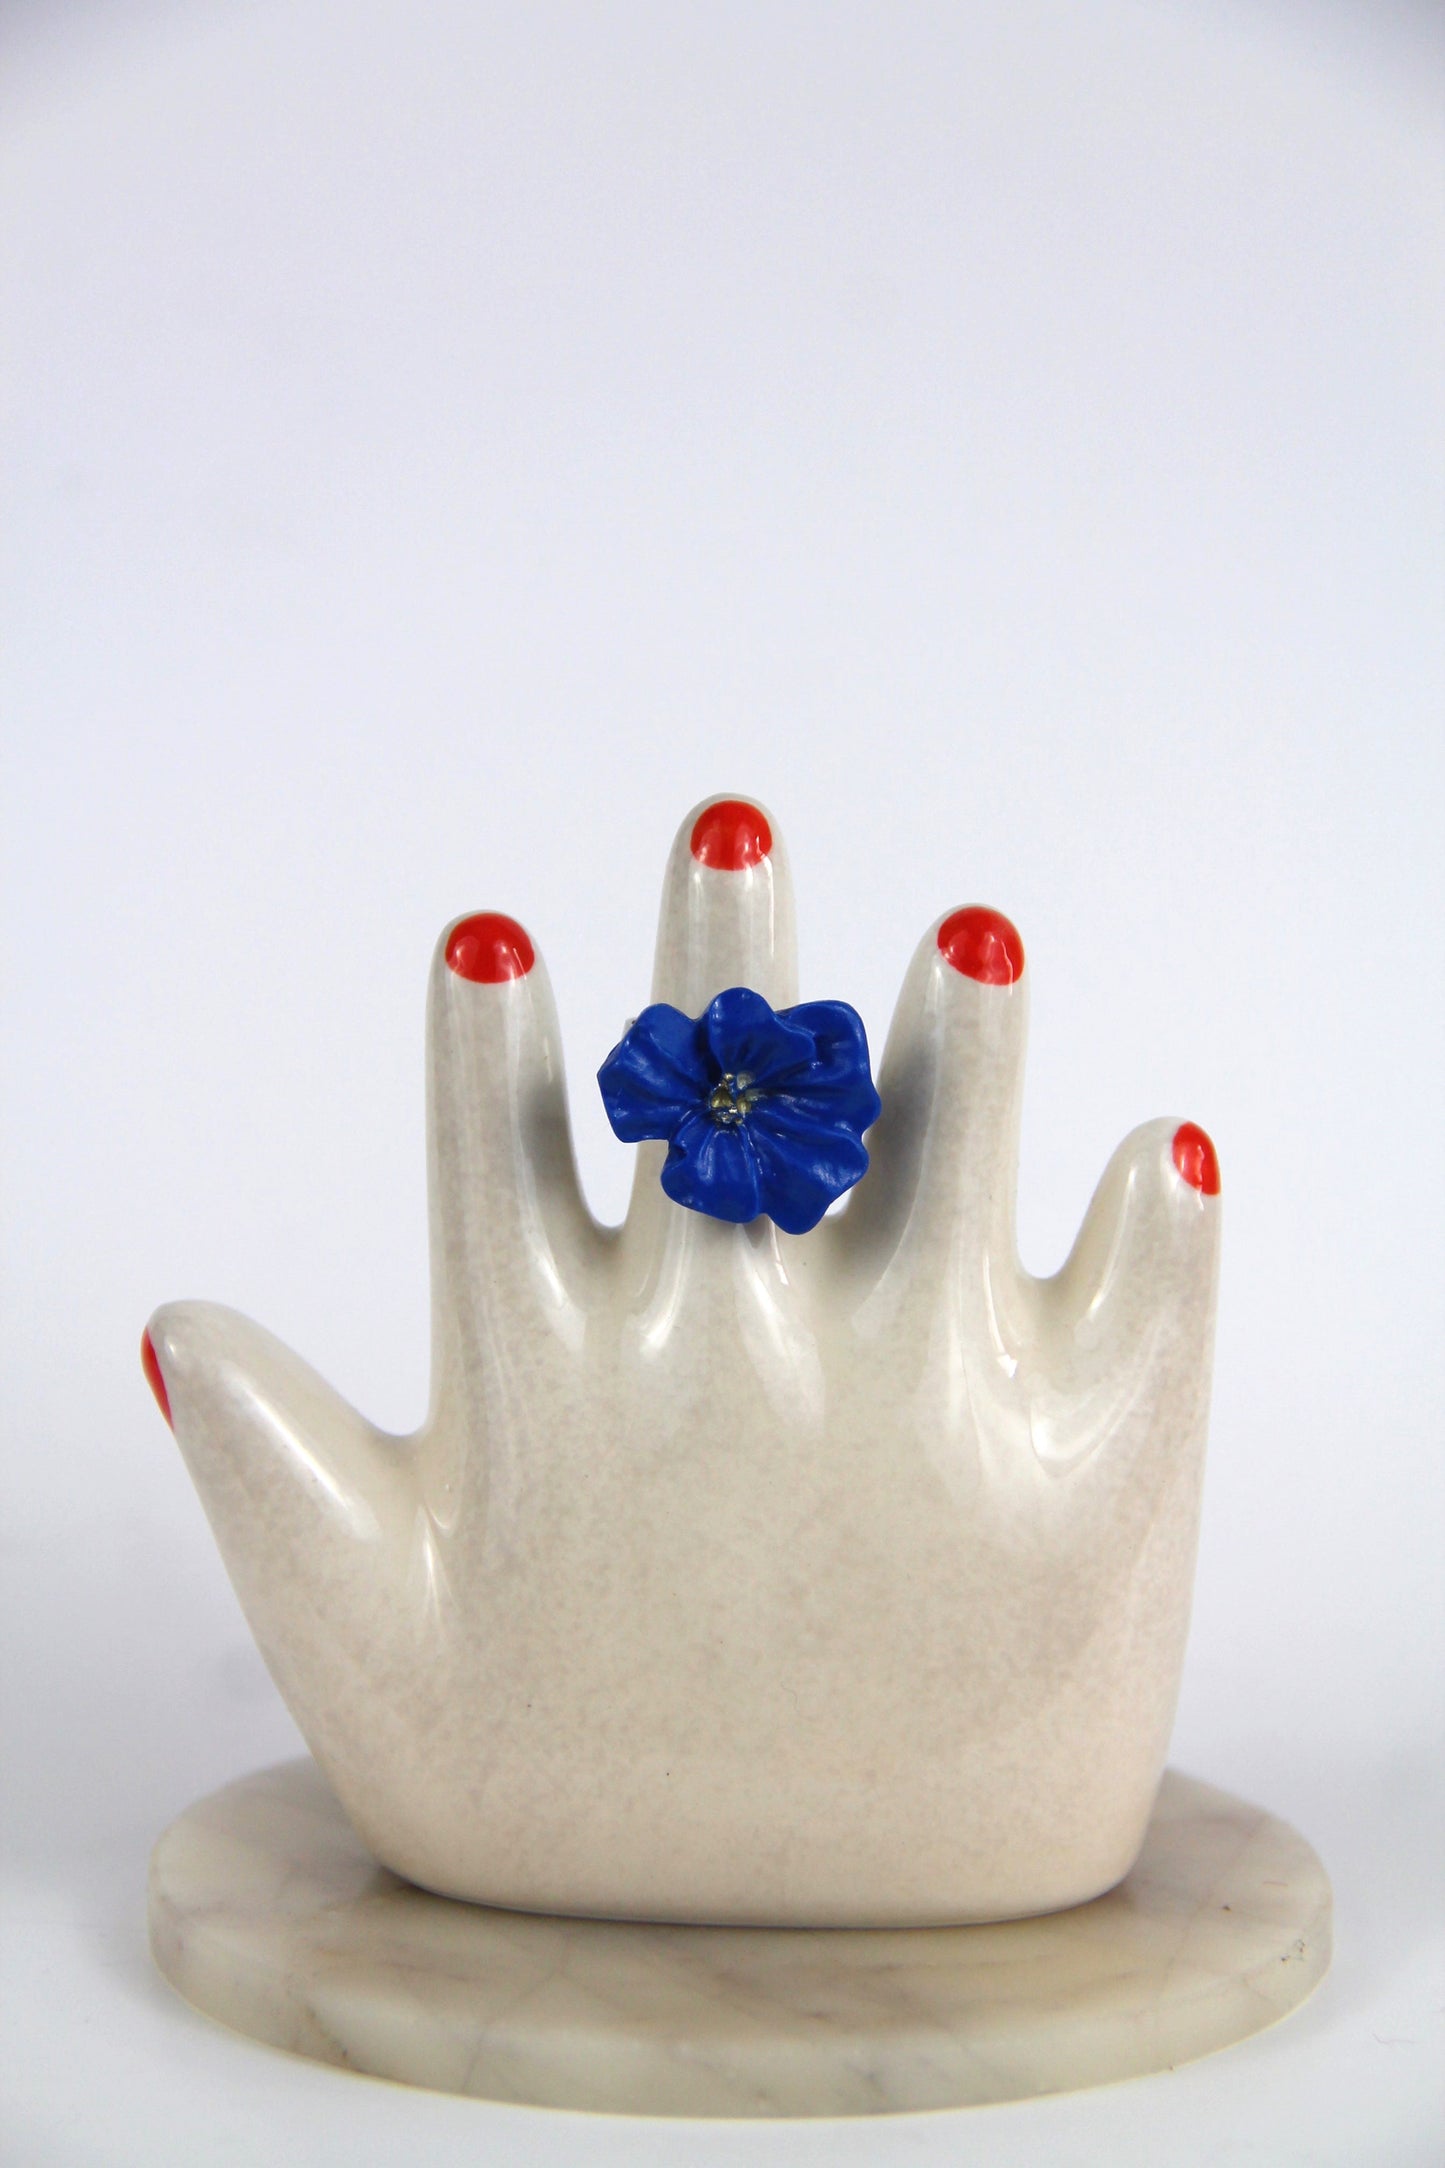 Flower Power ring - Buttercup - Royal blue